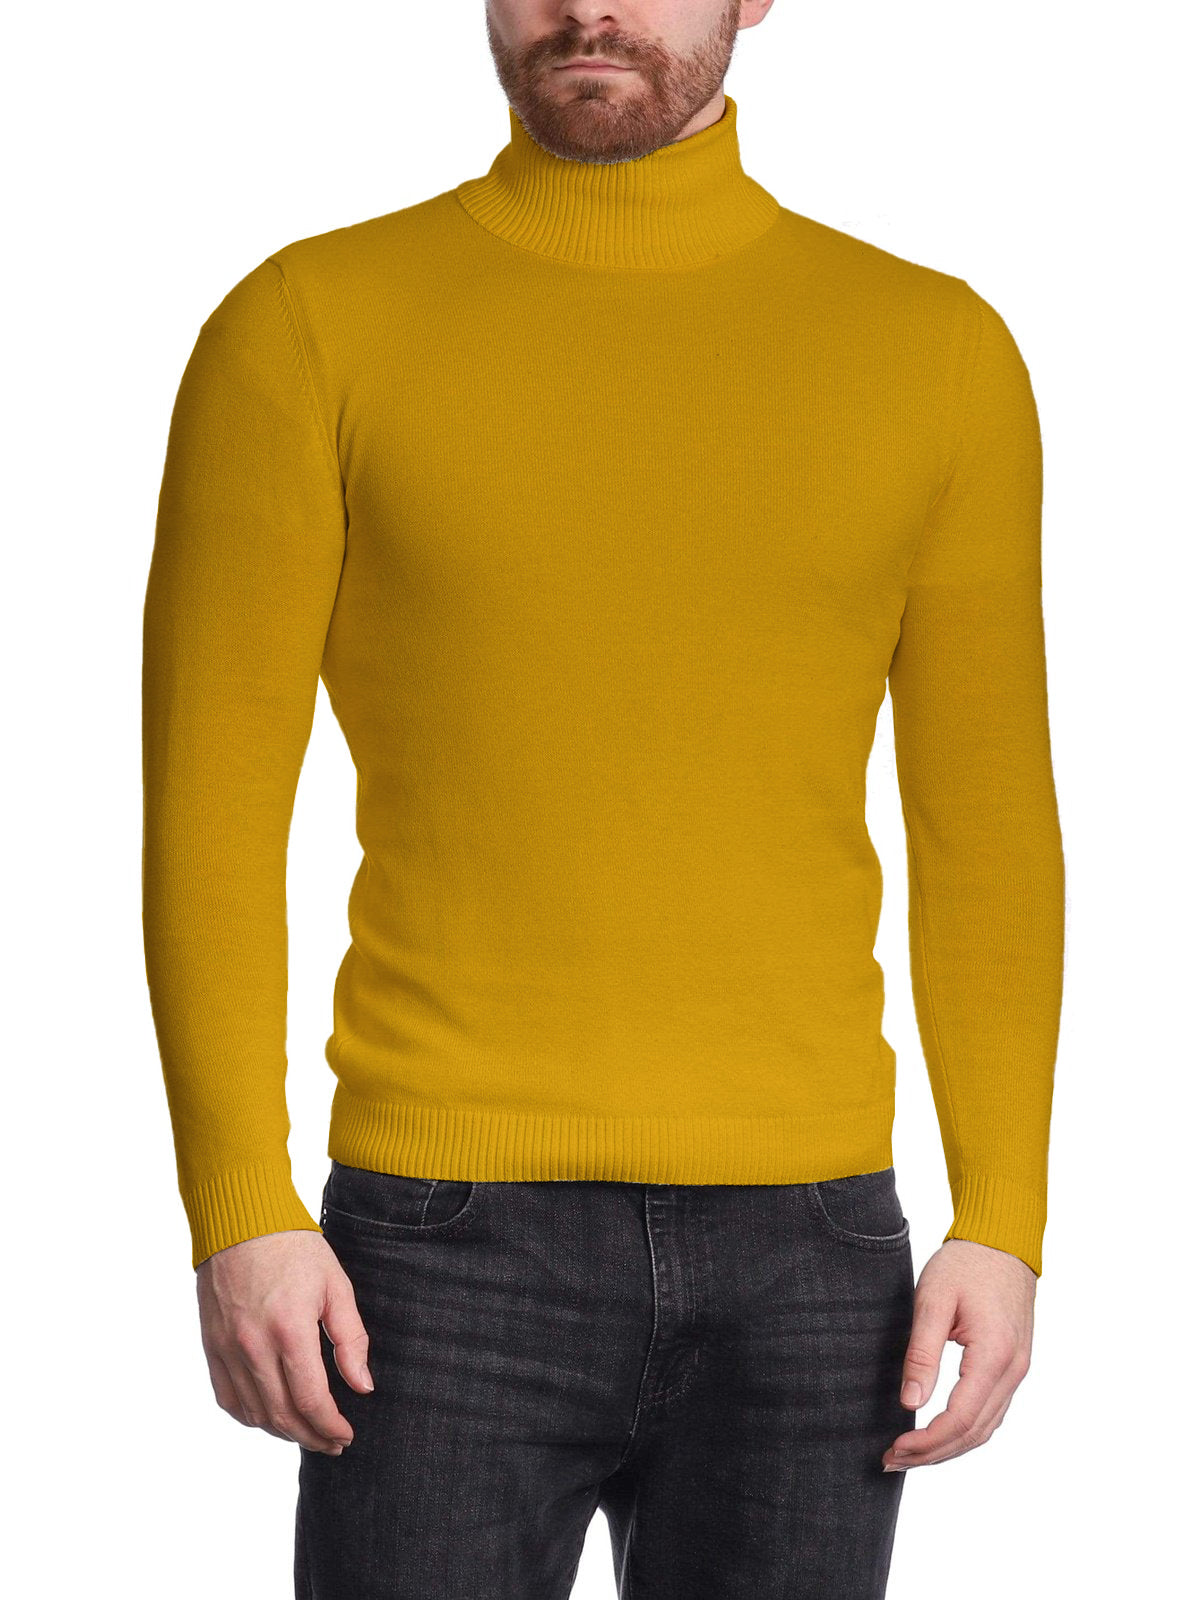 Arthur Black Men's Solid Mustard Pullover Cotton Blend Turtleneck Sweater Shirt